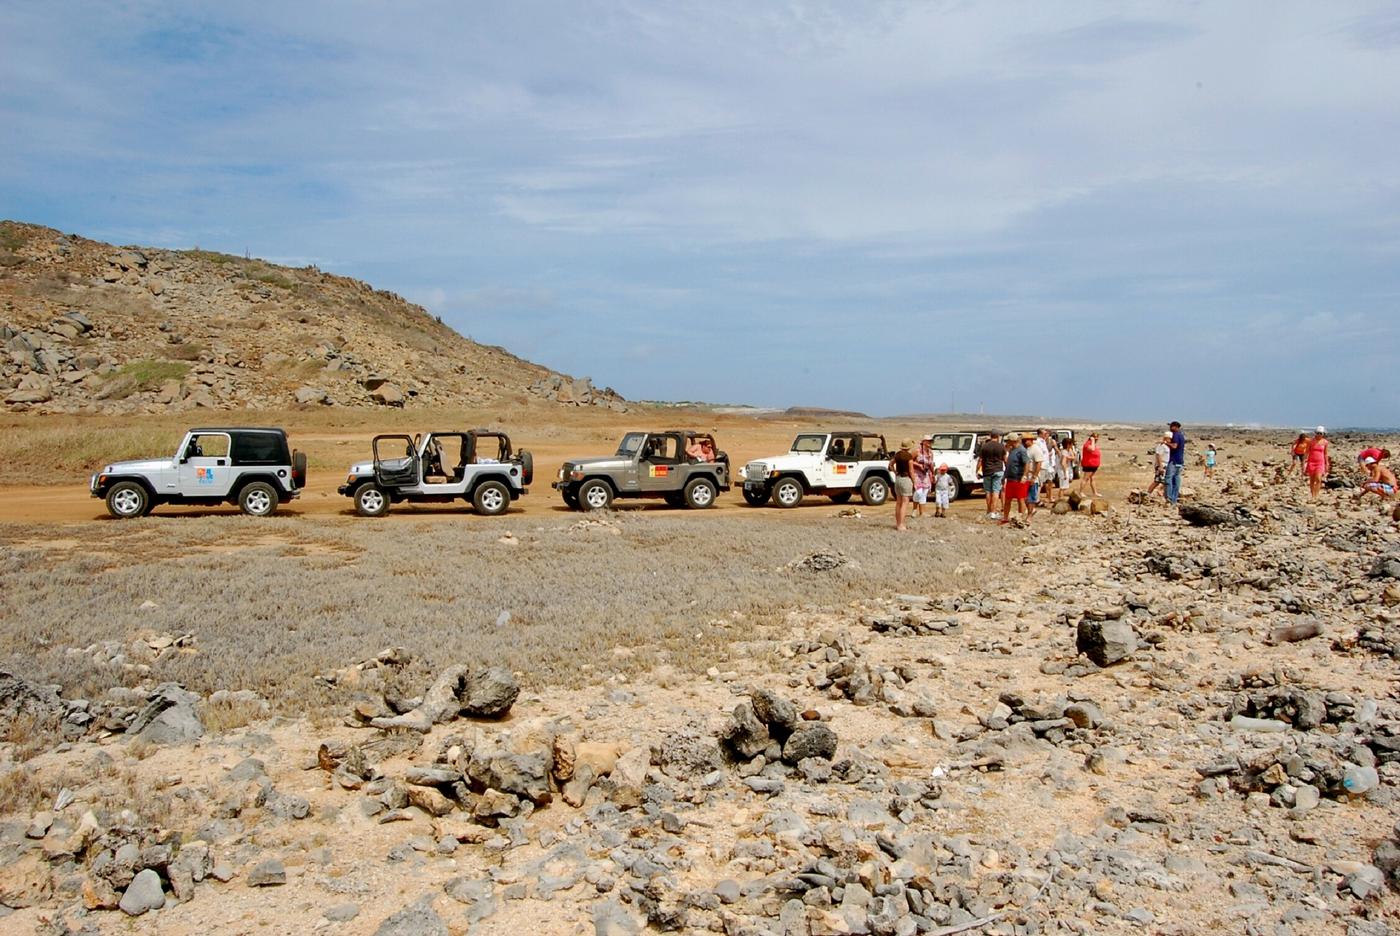 Best jeep tour in aruba #4